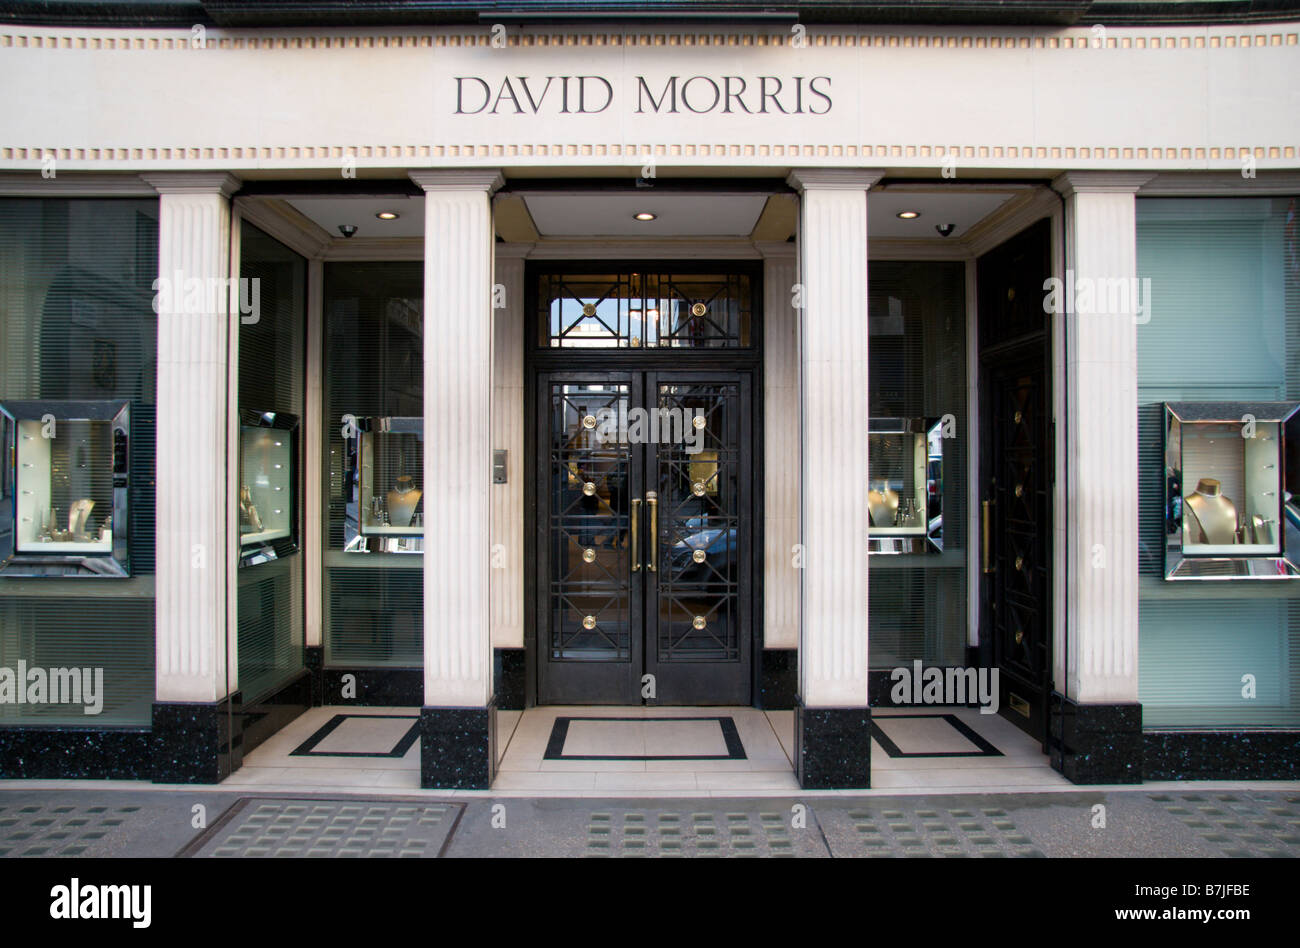 The shop front of the David Morris Jewellery store on New Bond Street, London, England. Jan 2009 Stock Photo